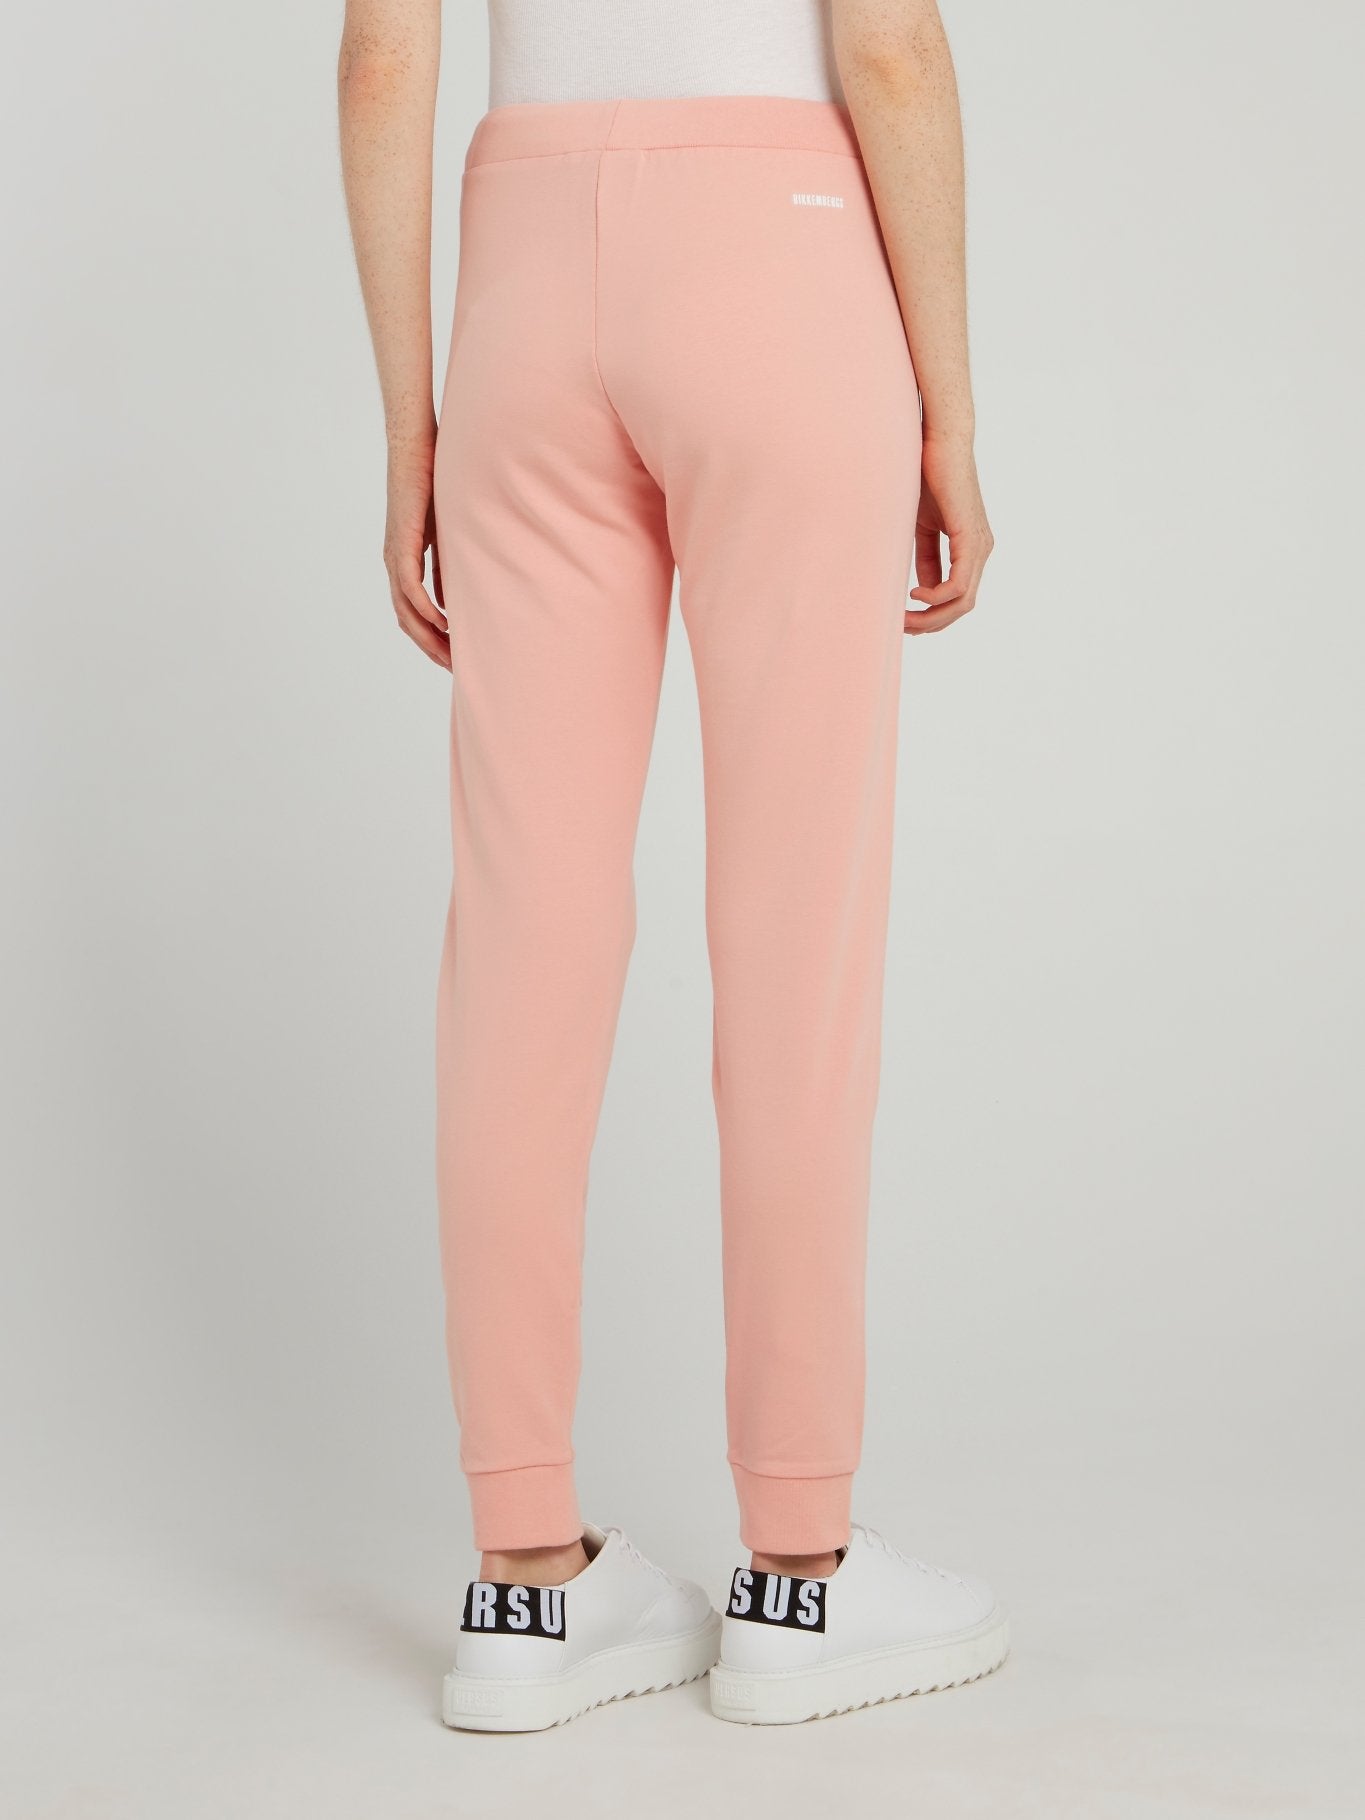 Pink Drawstring Fleece Sweatpants